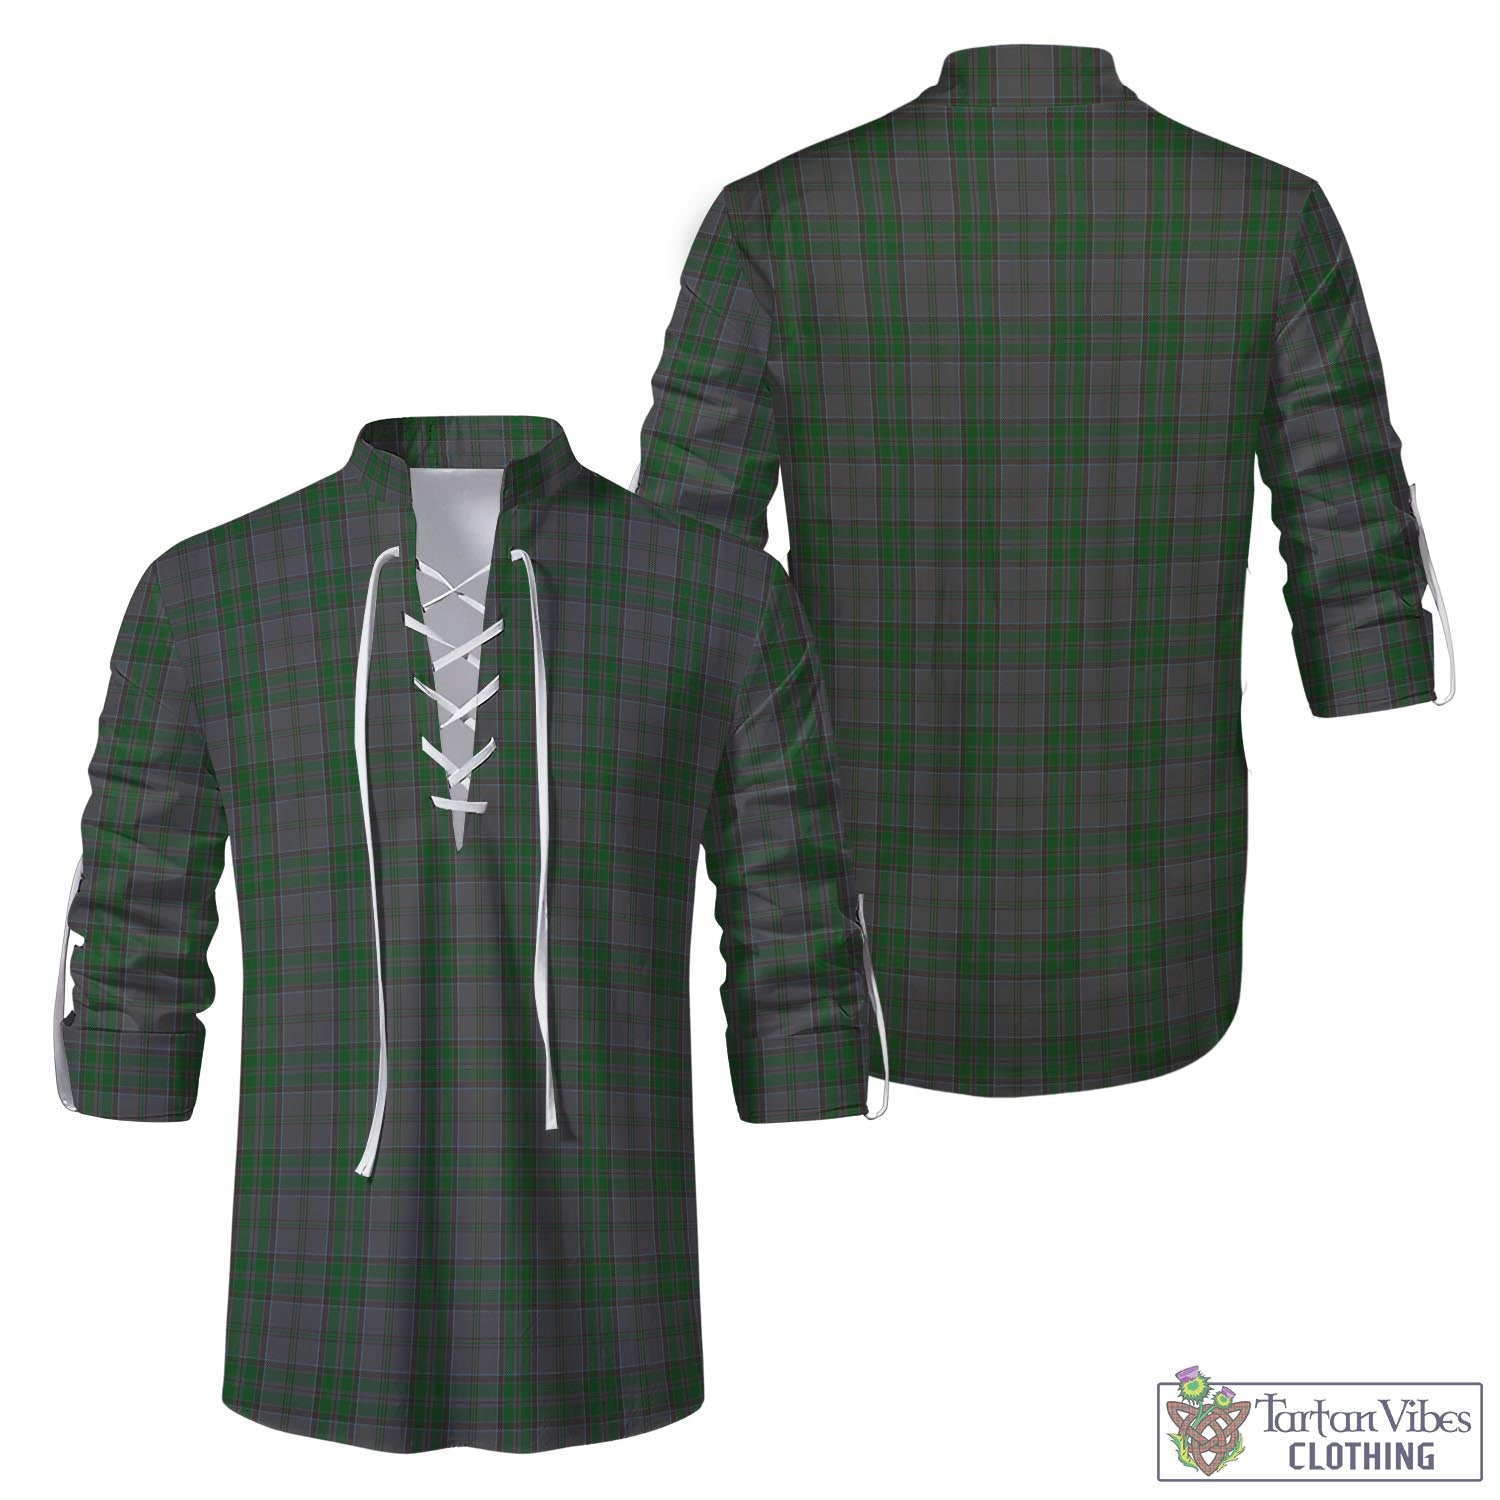 Tartan Vibes Clothing Wicklow County Ireland Tartan Men's Scottish Traditional Jacobite Ghillie Kilt Shirt